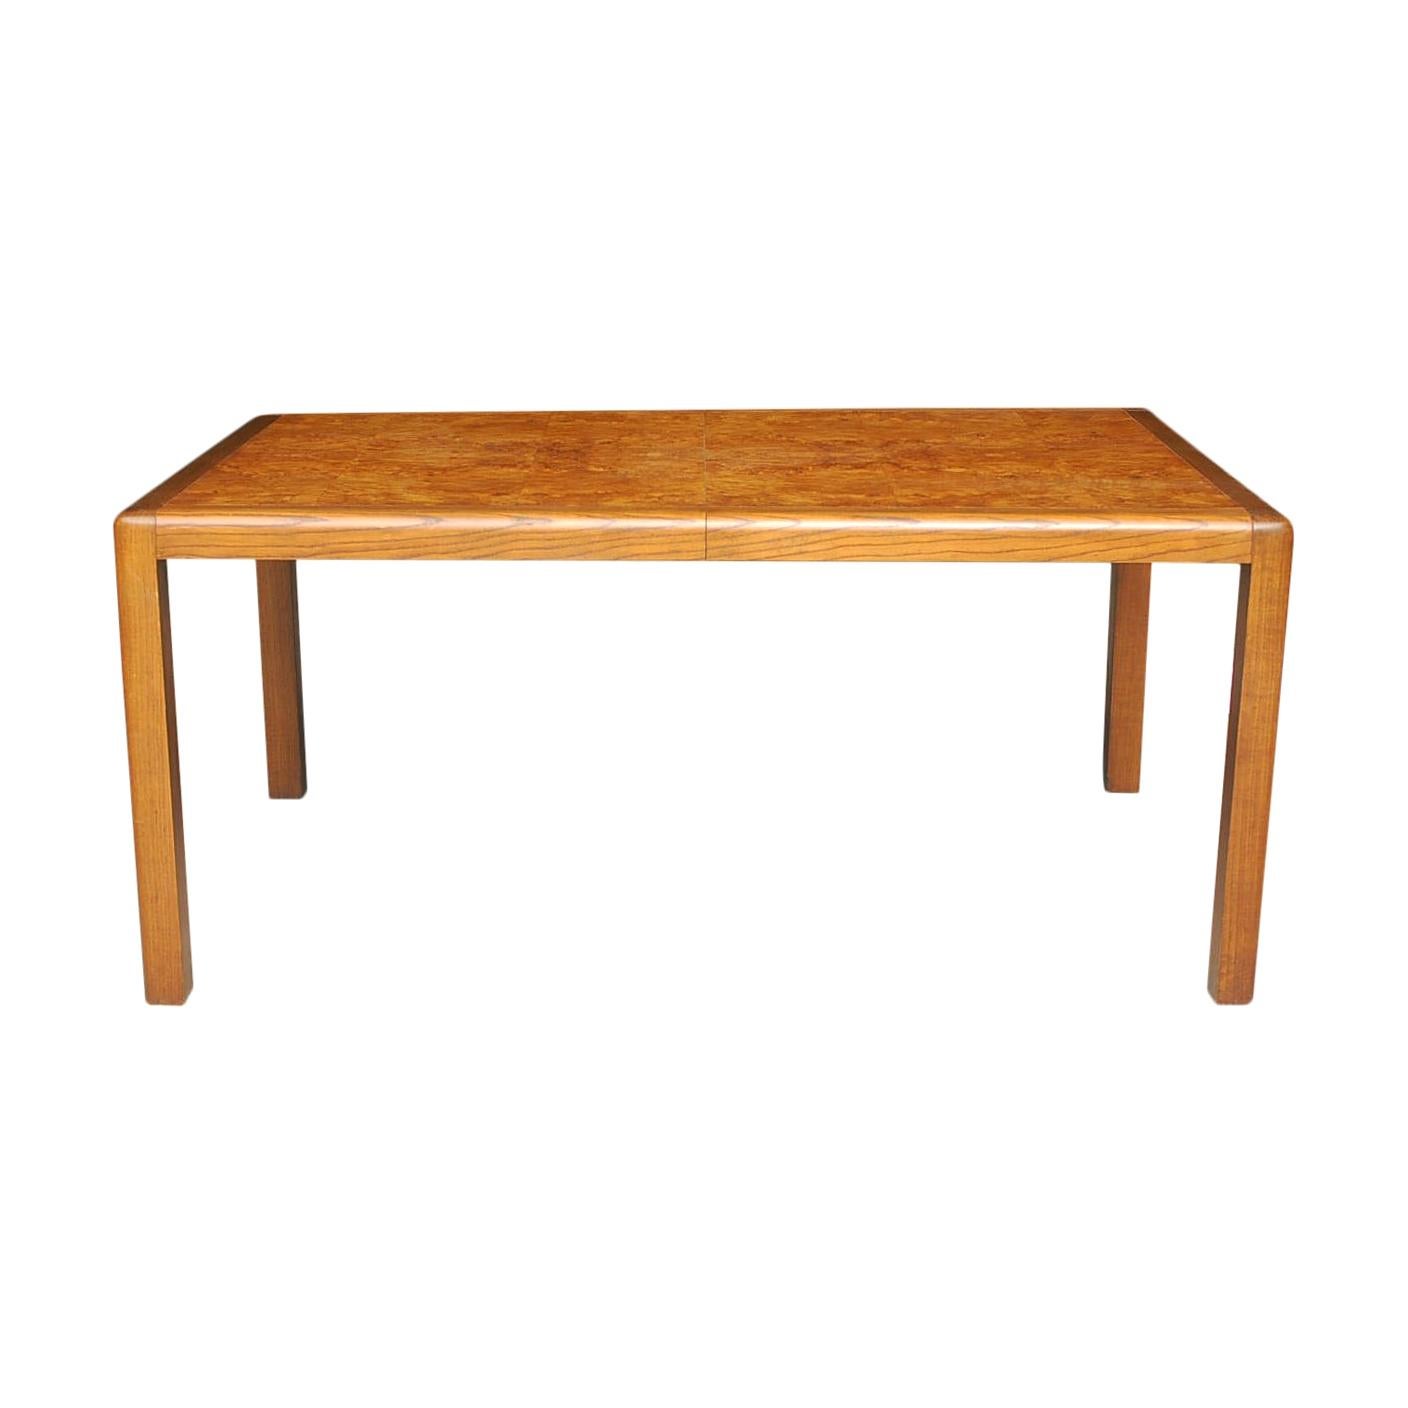 Midcentury Transitional Modern Oak and Walnut Burl Rectangular Dining Table